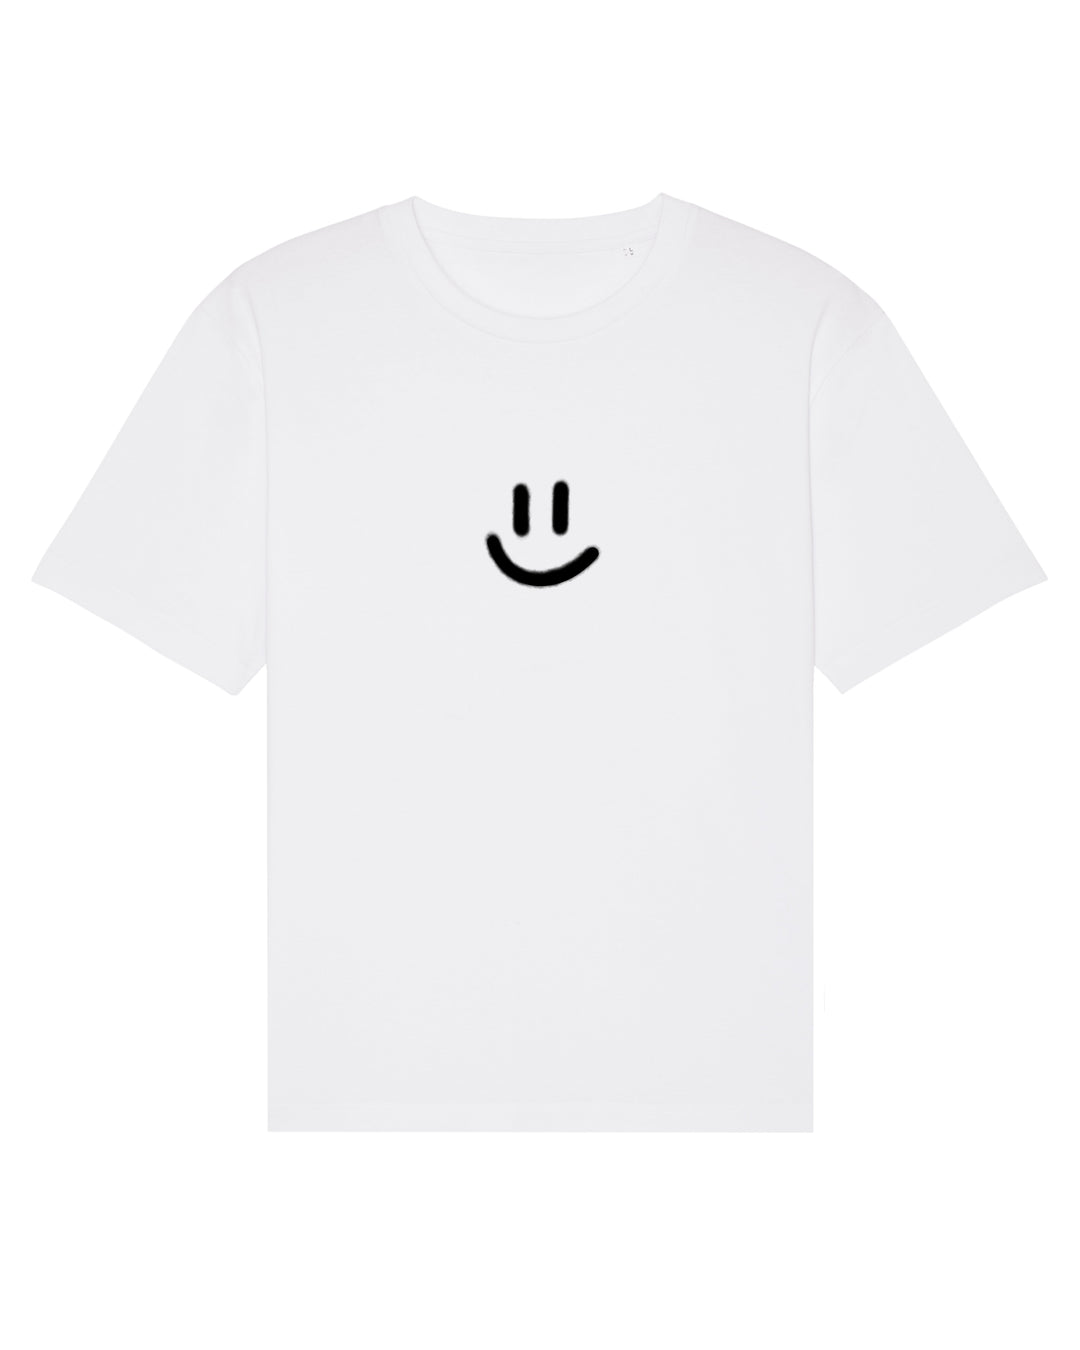 Deniz Bul - Freestyle T-Shirt (white)